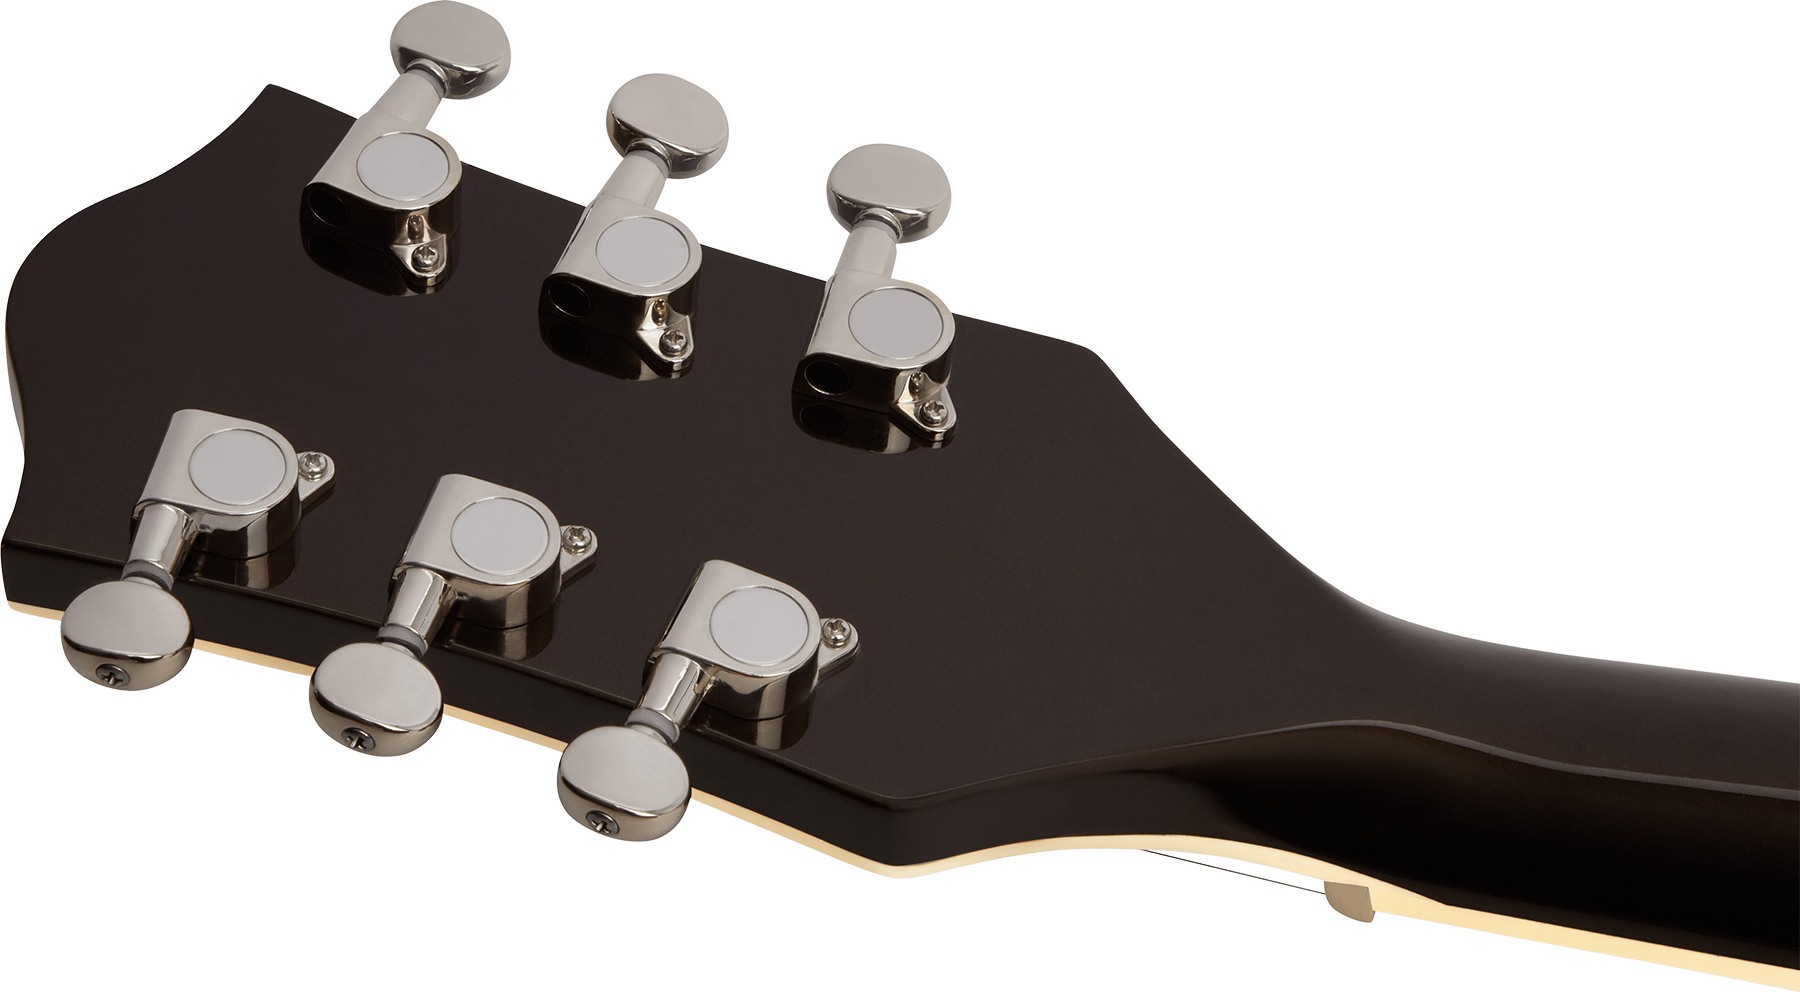 Gretsch G5622 Center Bloc Double Cut V-stoptail Electromatic Hh Ht Lau - Bristol Fog - Semi hollow elektriche gitaar - Variation 3